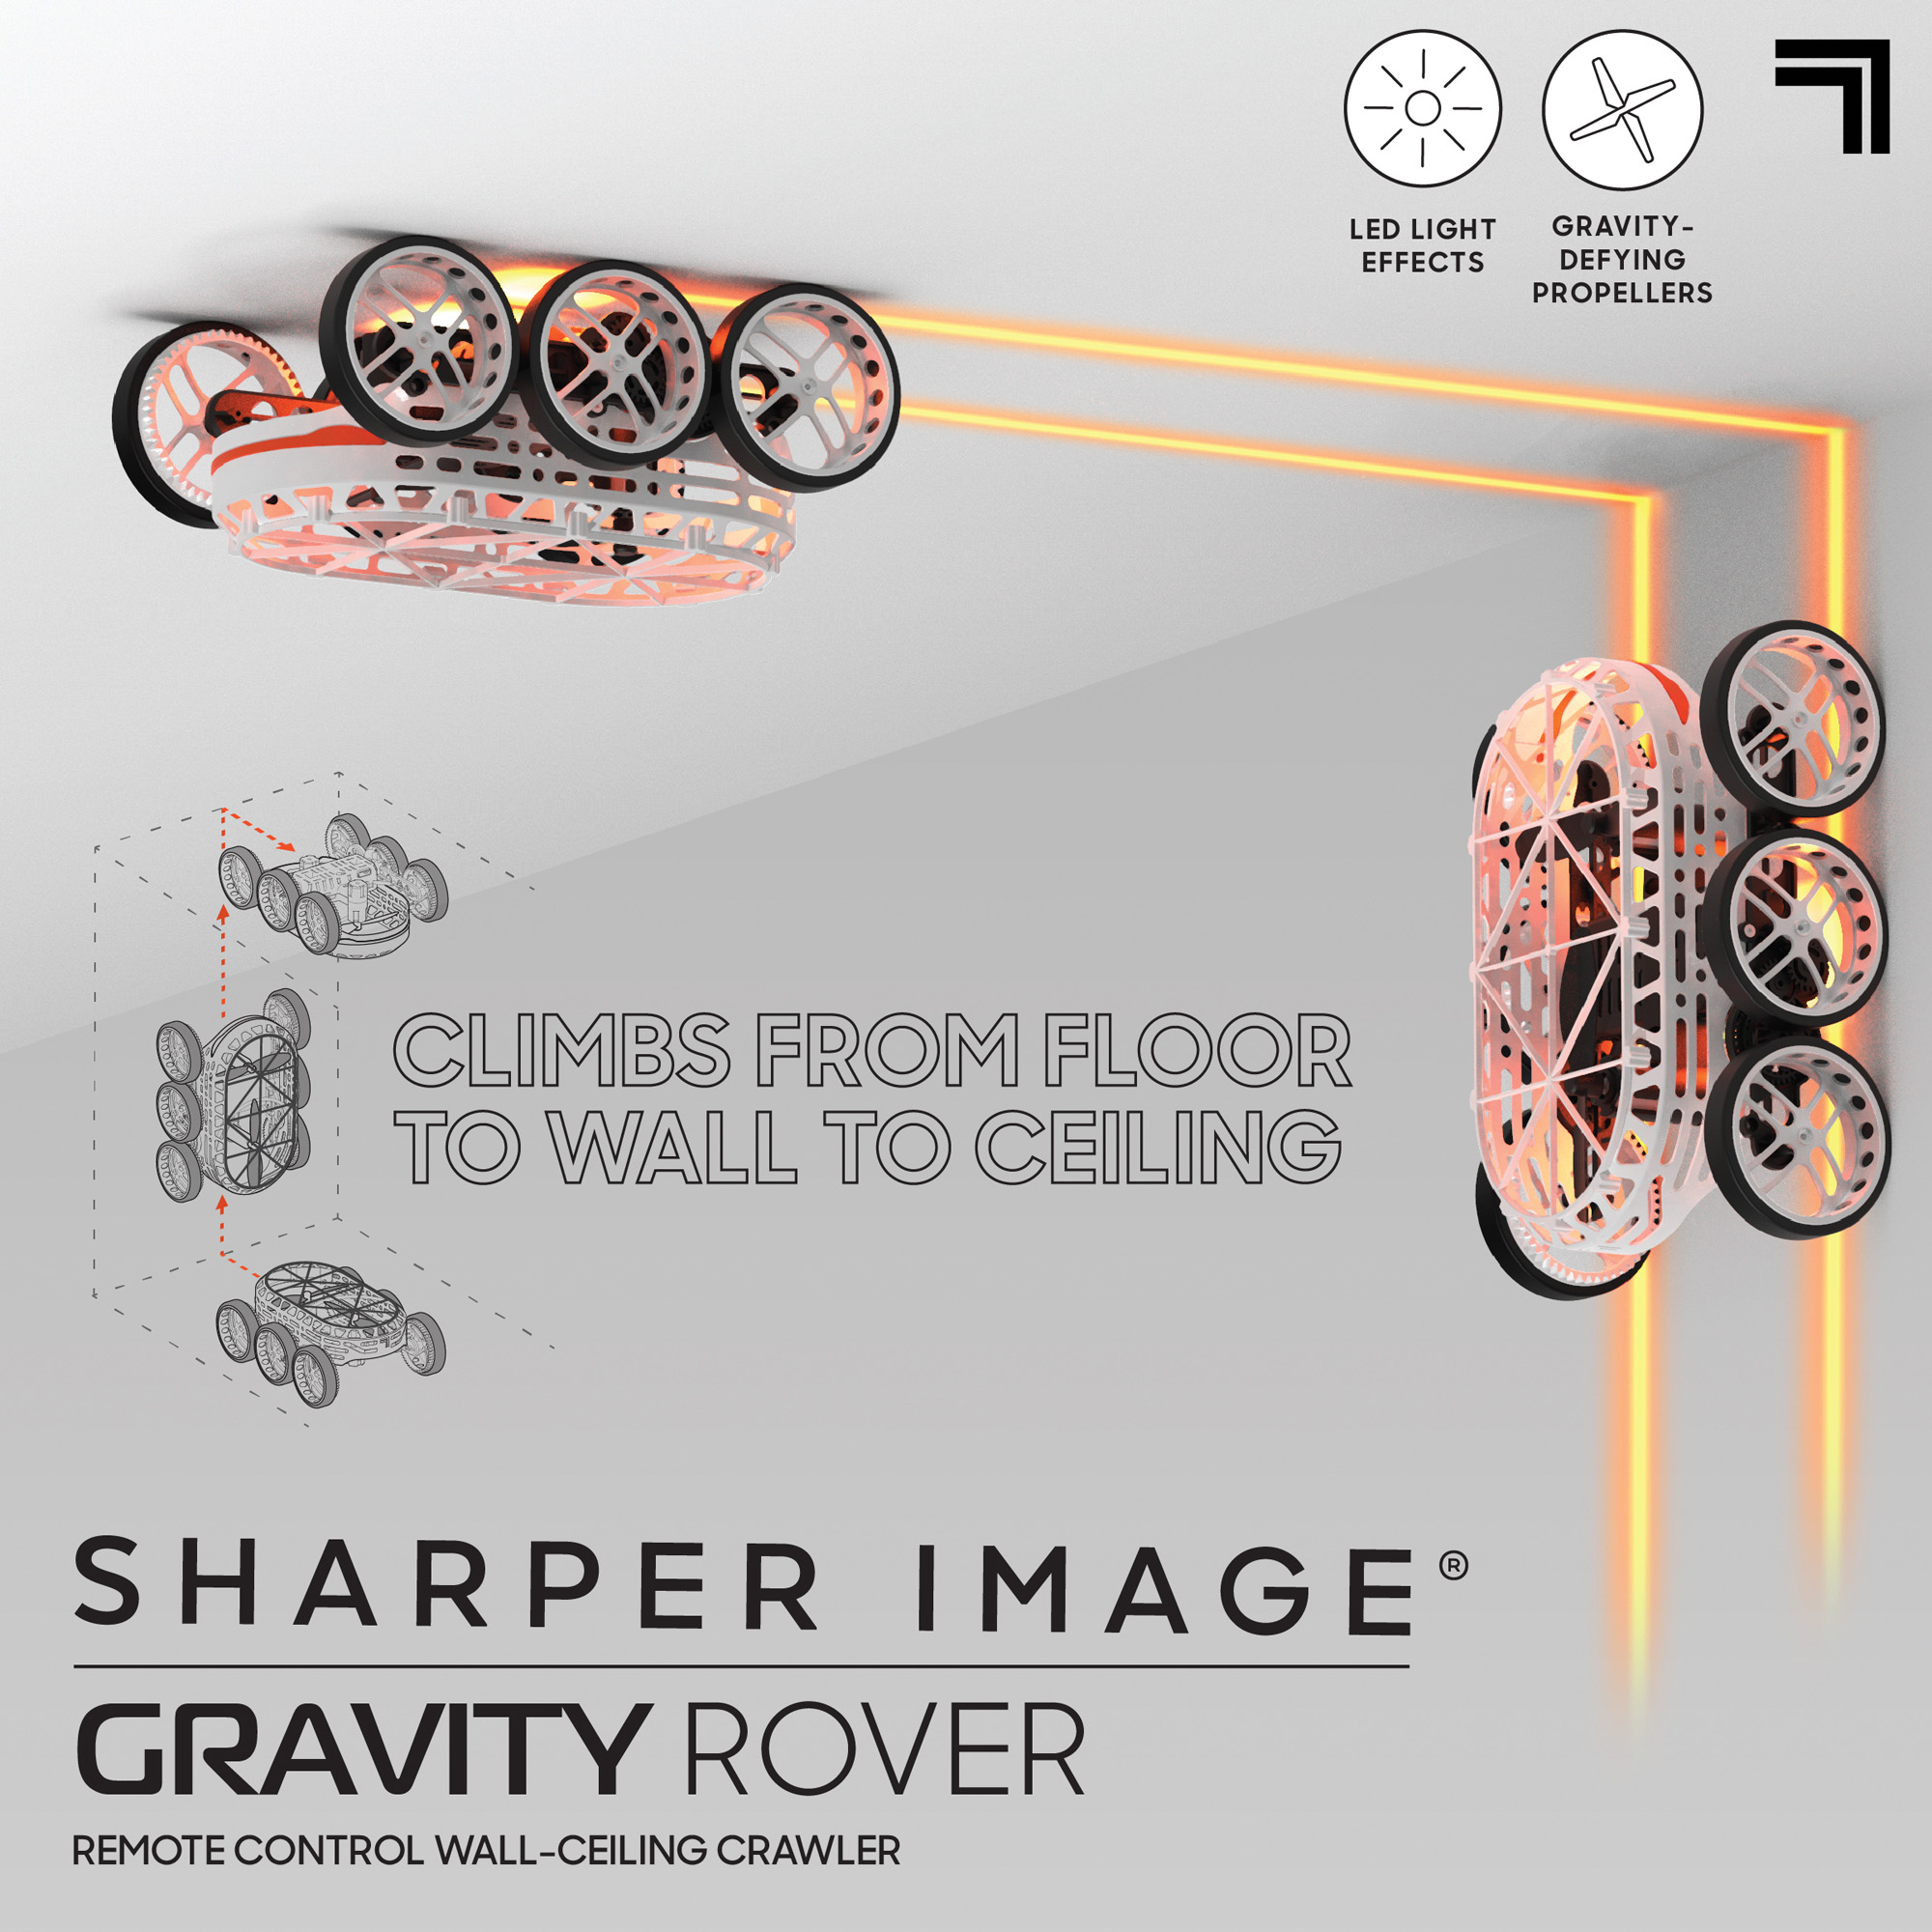 Sharper image - macchinina che sfida la gravità - gravity rover - Sharper Image